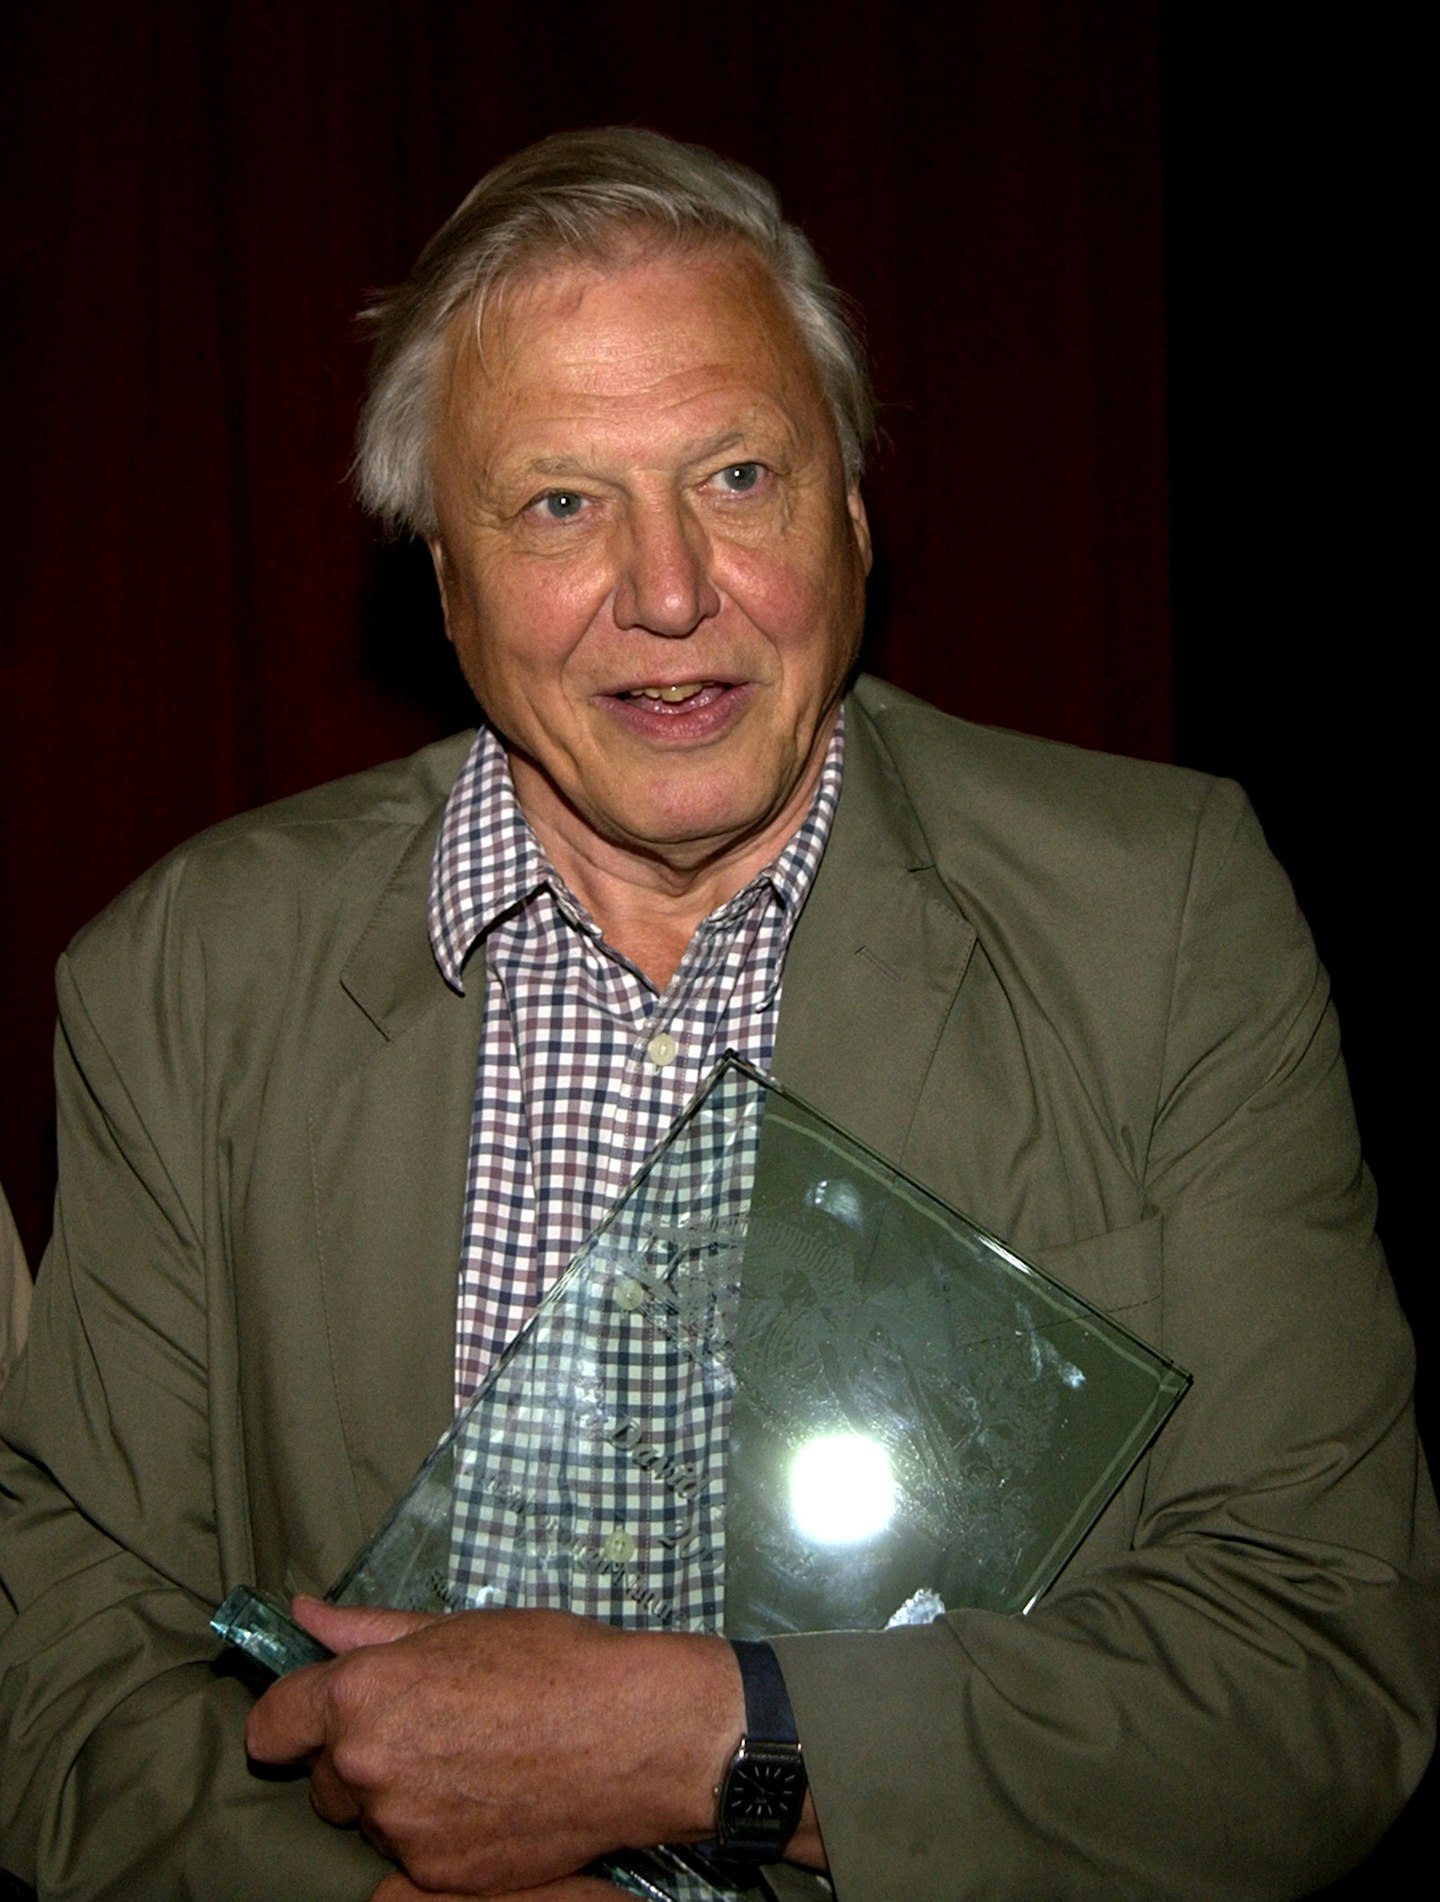 David Attenborough in 2005